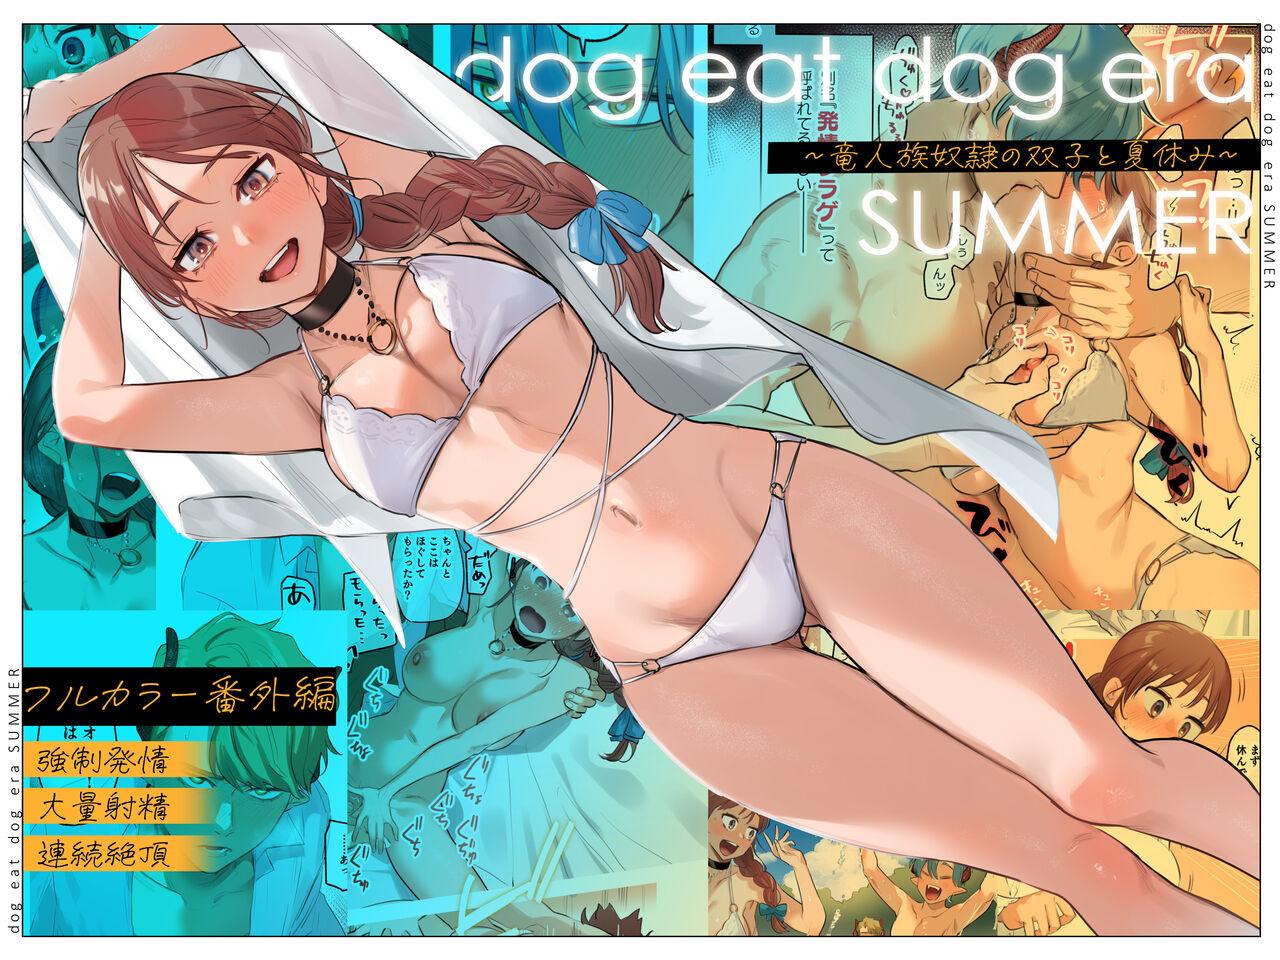 Family dog eat dog era SUMMER ∼ryūjinzoku dorei no futago to natsuyasumi | ∼Summer vacation with the twin slaves of the dragon race∼ - Original Ass Licking - Picture 1